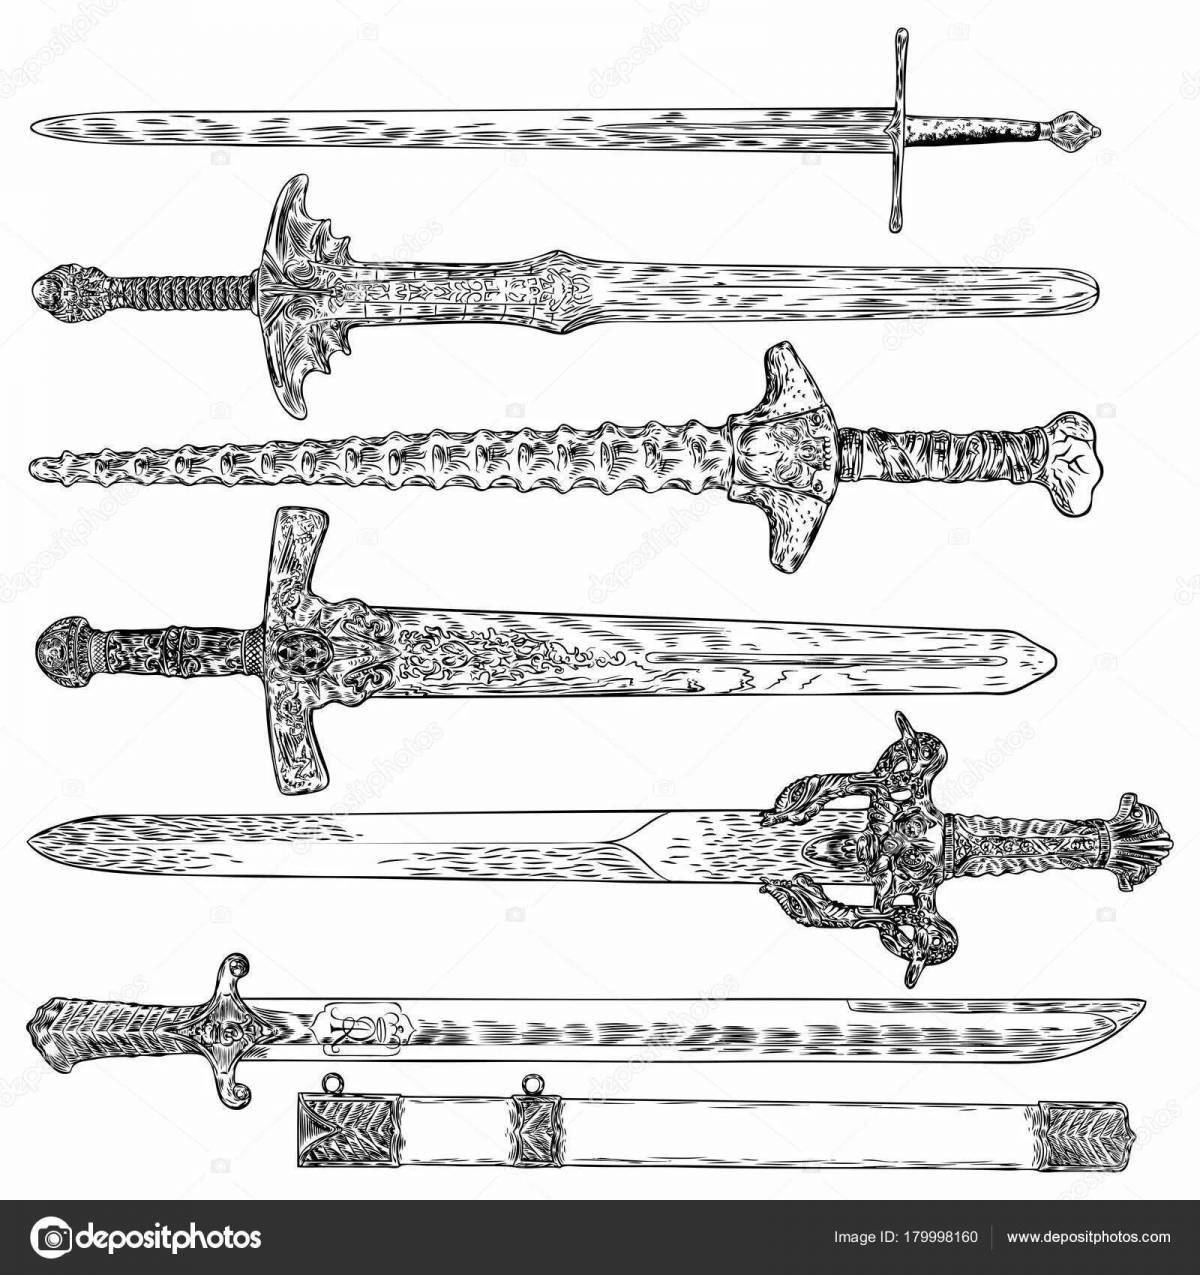 Splendid treasurer's sword coloring page